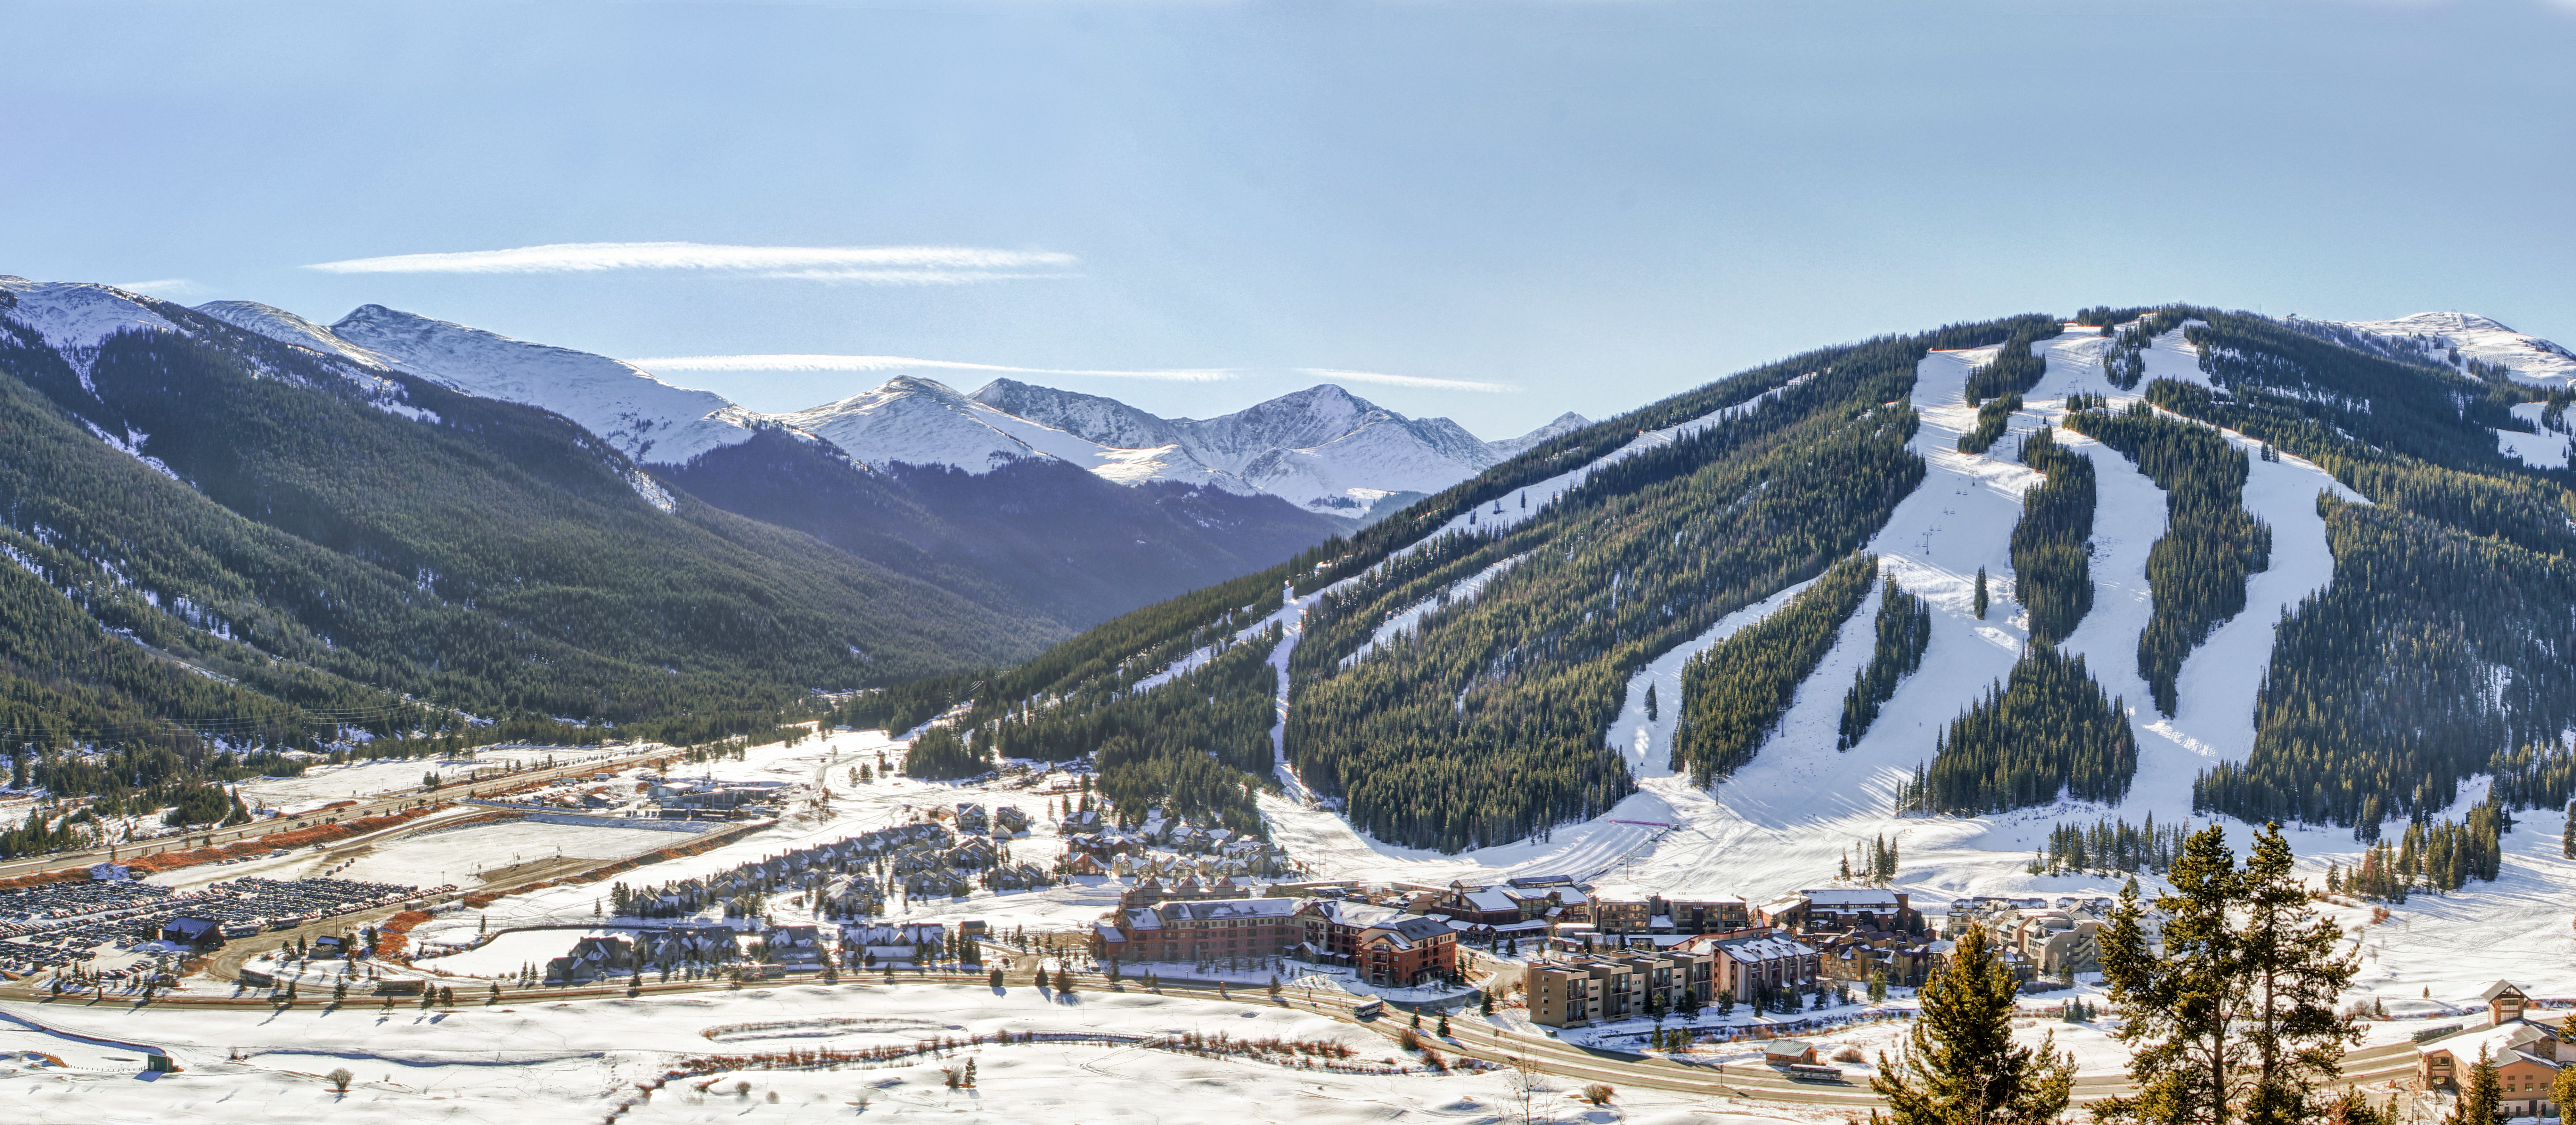 Das Skigebiet "Copper Mountain" in Colorado